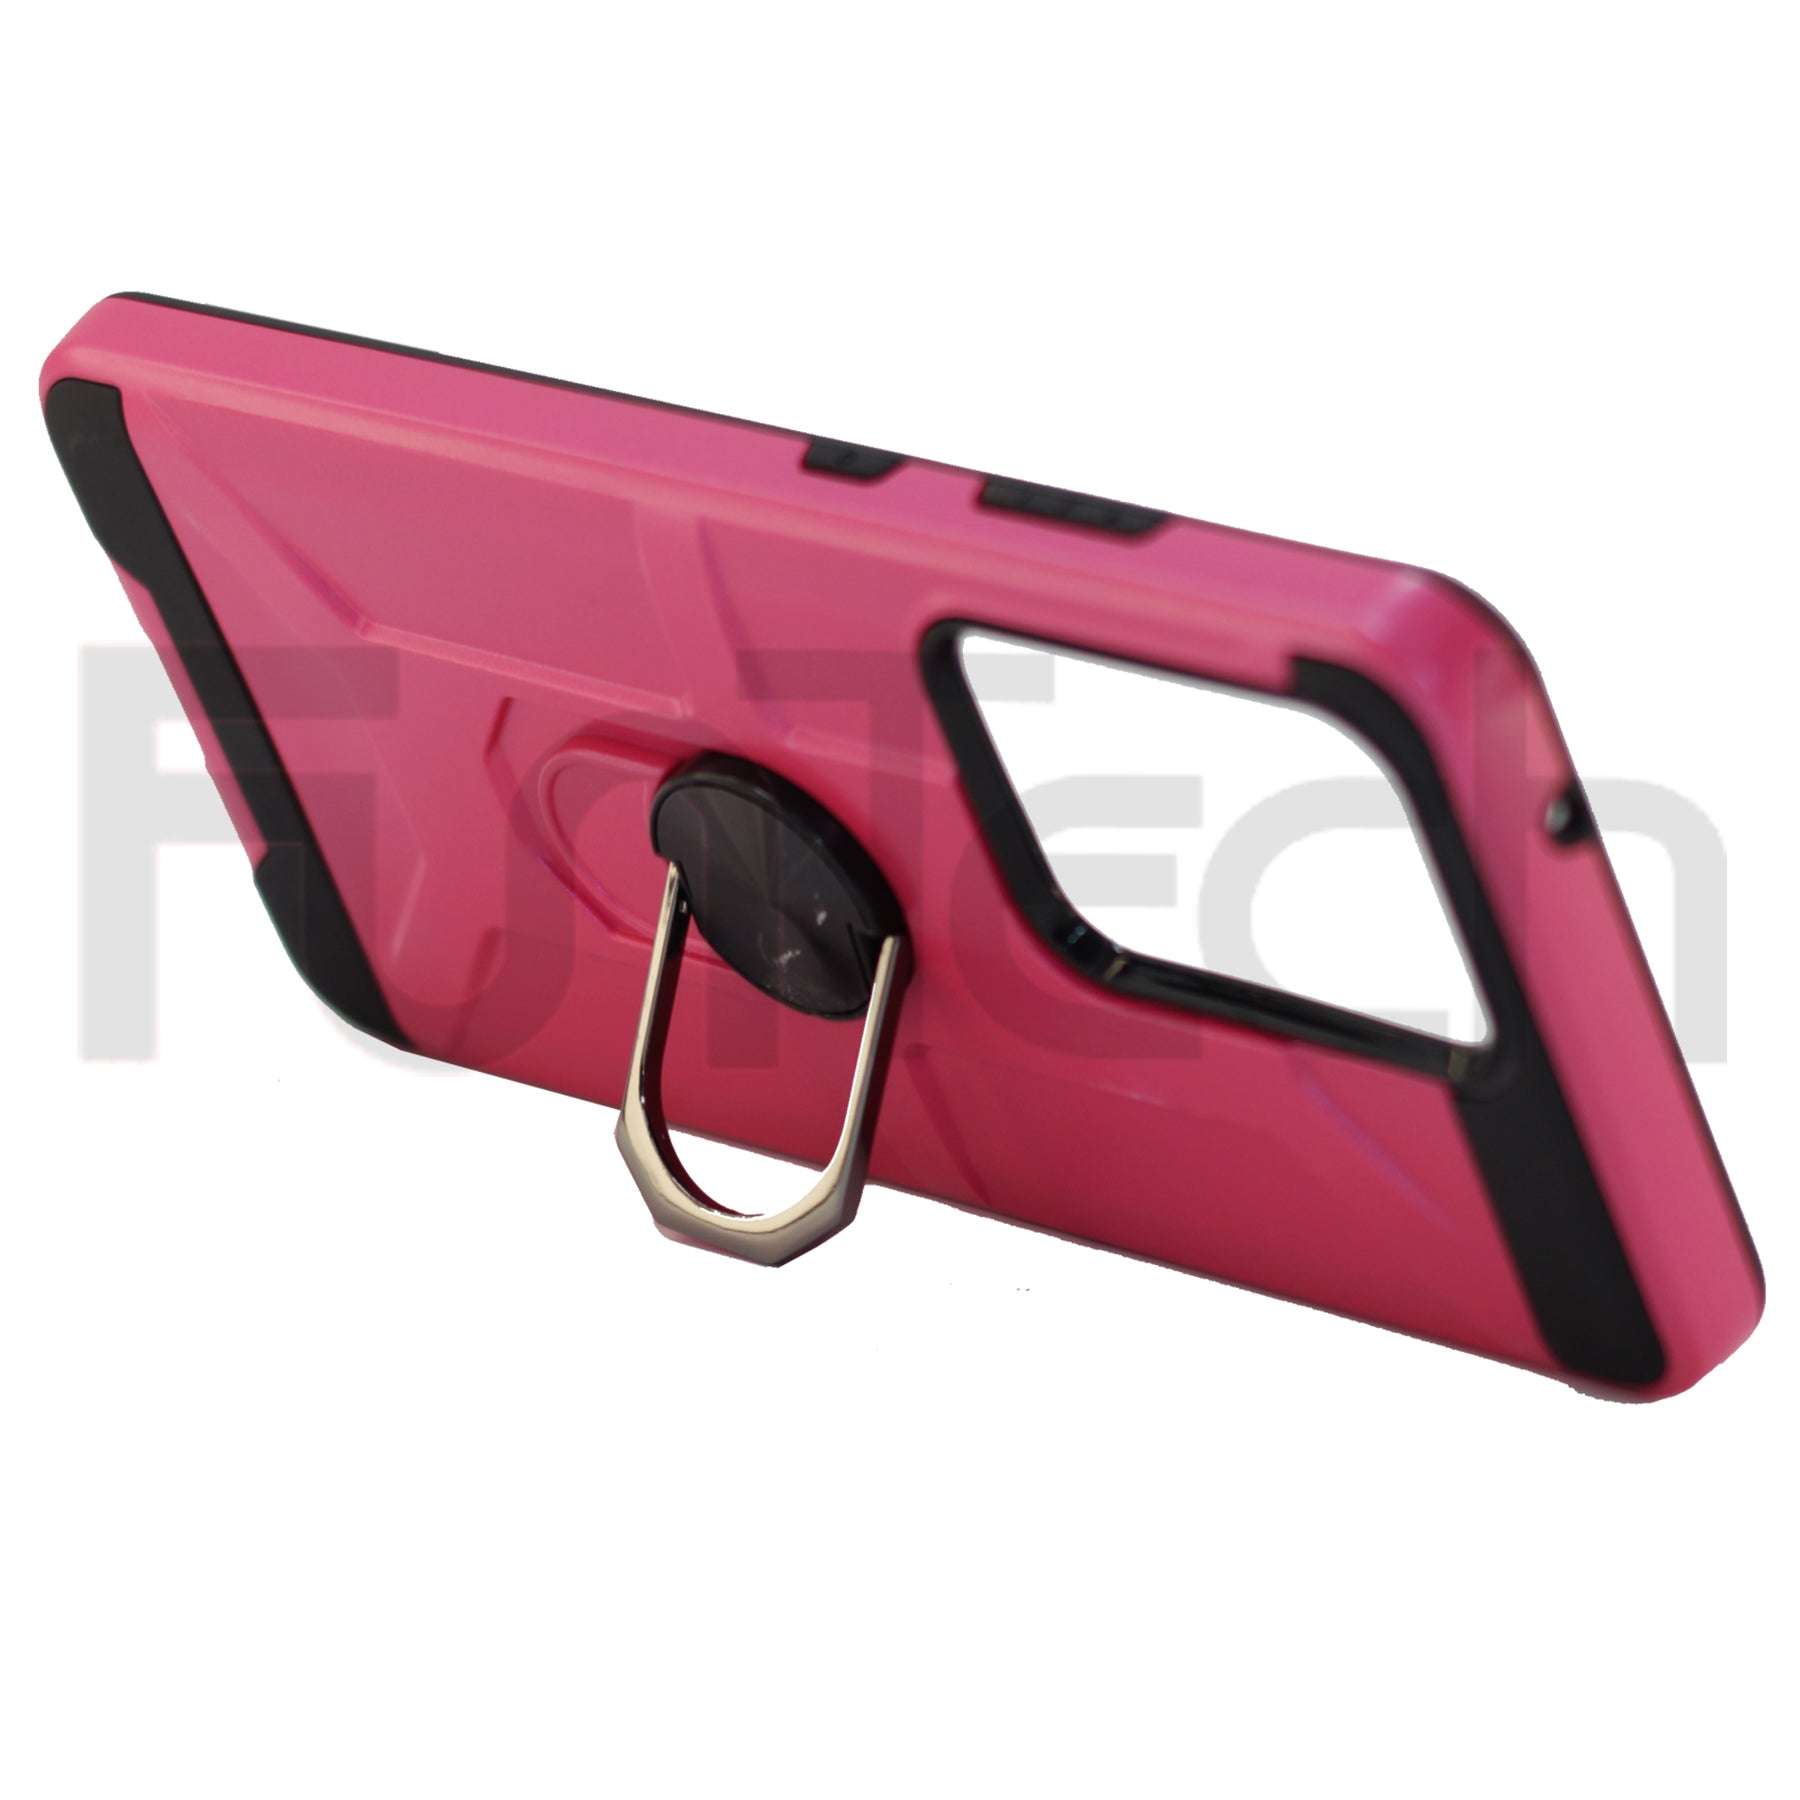 Samsung S20 Ultra Shockproof Ring Armor Case, Color Pink